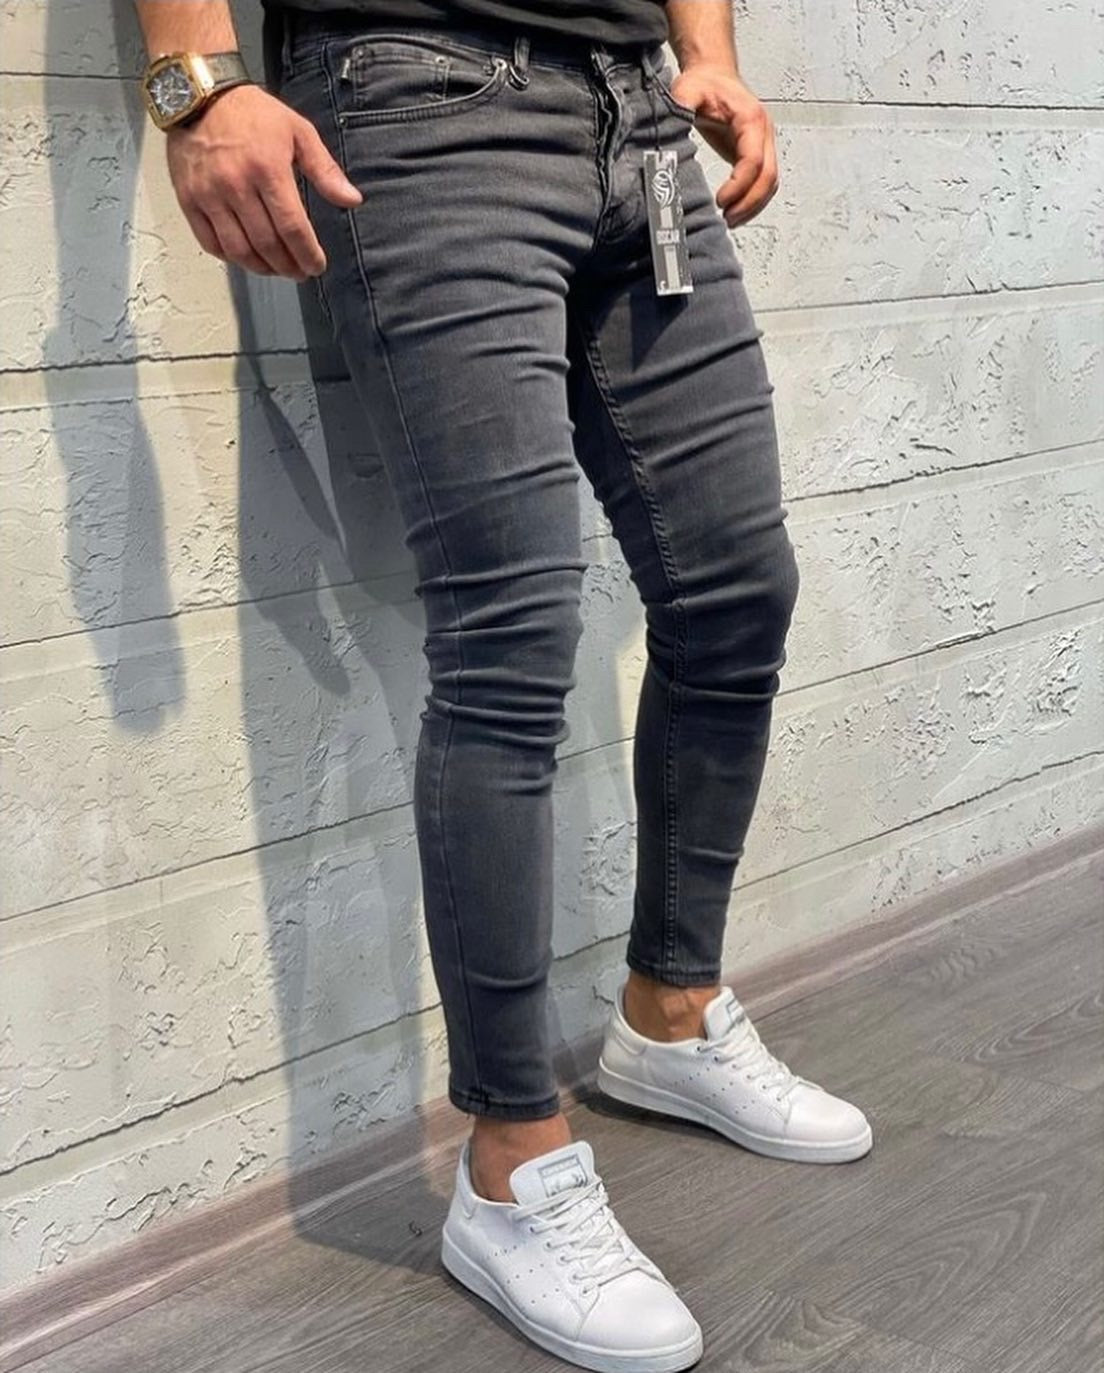 DaCovet Ash Grey Jeans